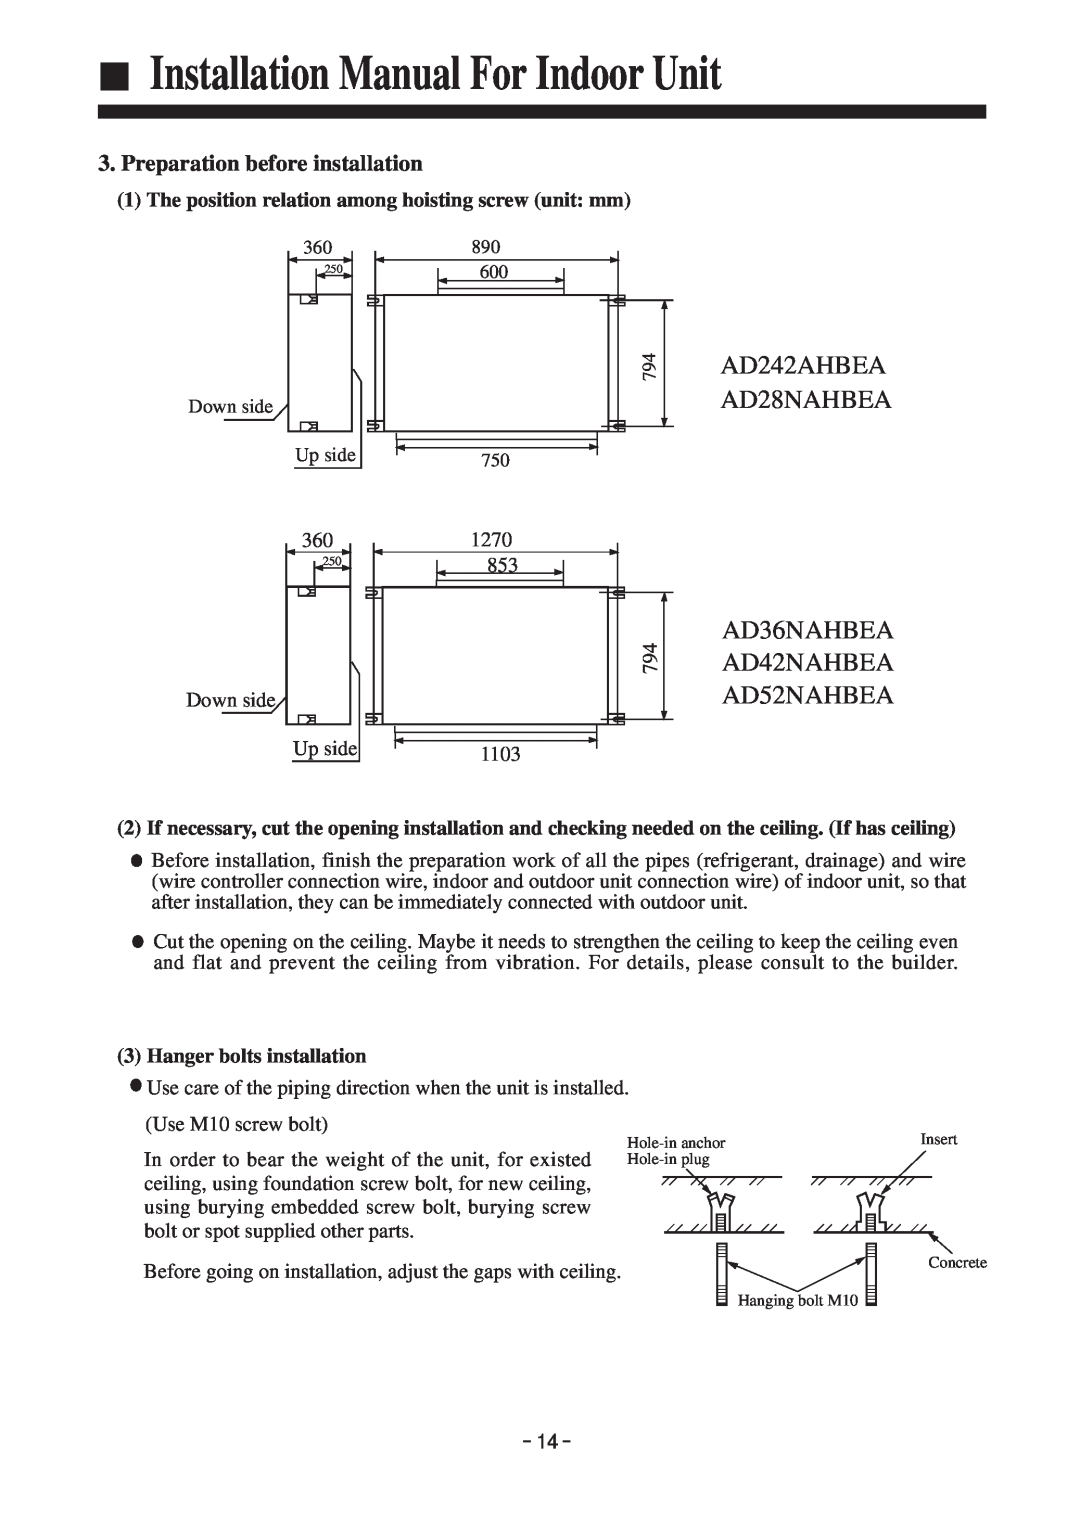 Haier instruction manual Installation Manual For Indoor Unit, AD242AHBEA AD28NAHBEA, AD36NAHBEA AD42NAHBEA AD52NAHBEA 